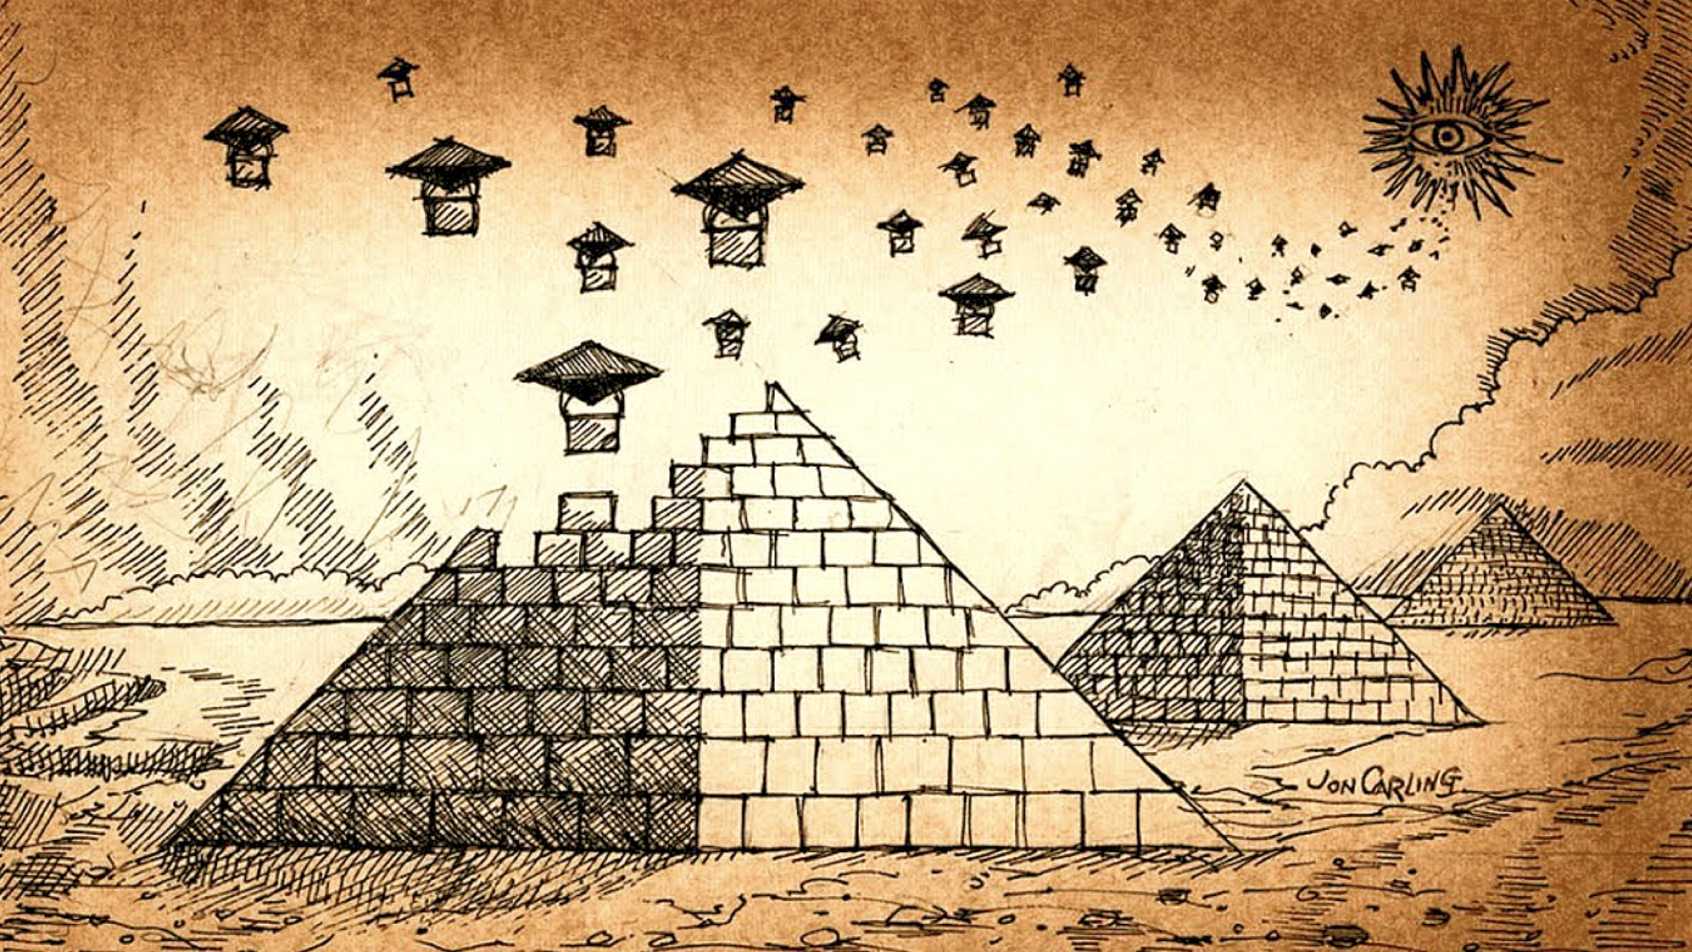 Construction de pyramide